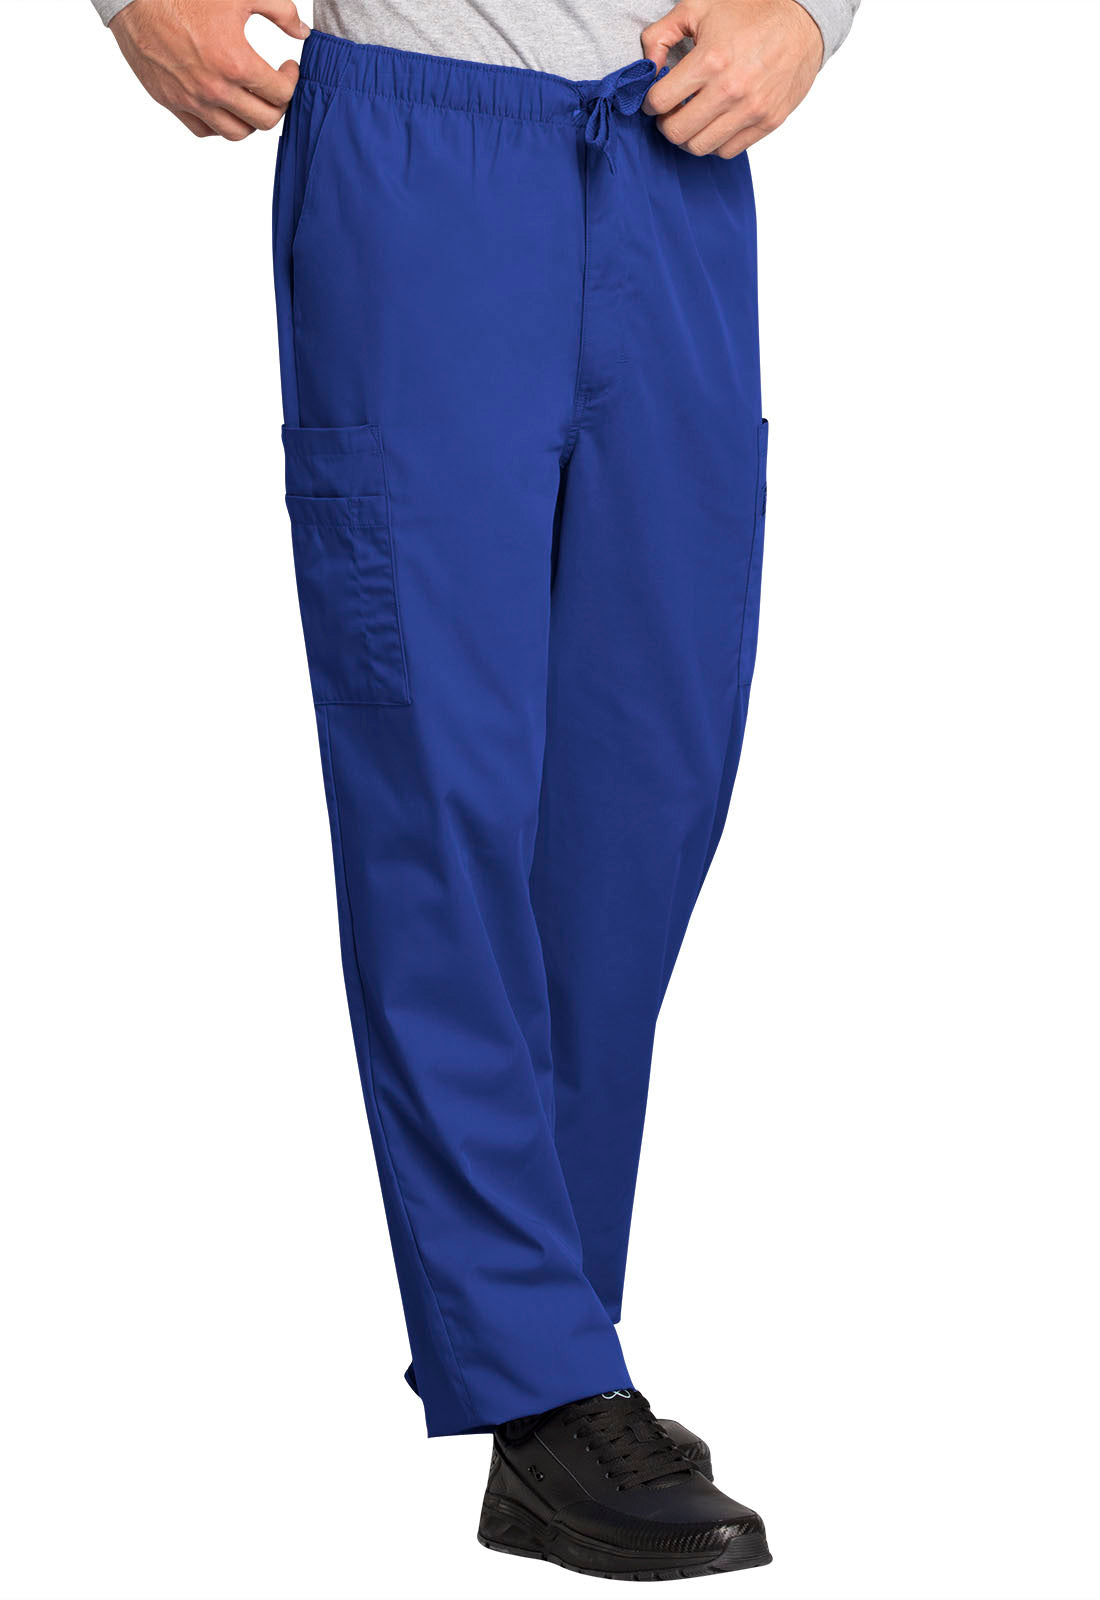 777 Body Flex Fold Over Waistband Pant - Professional Choice Uniform, Nursing Uniforms in Canada